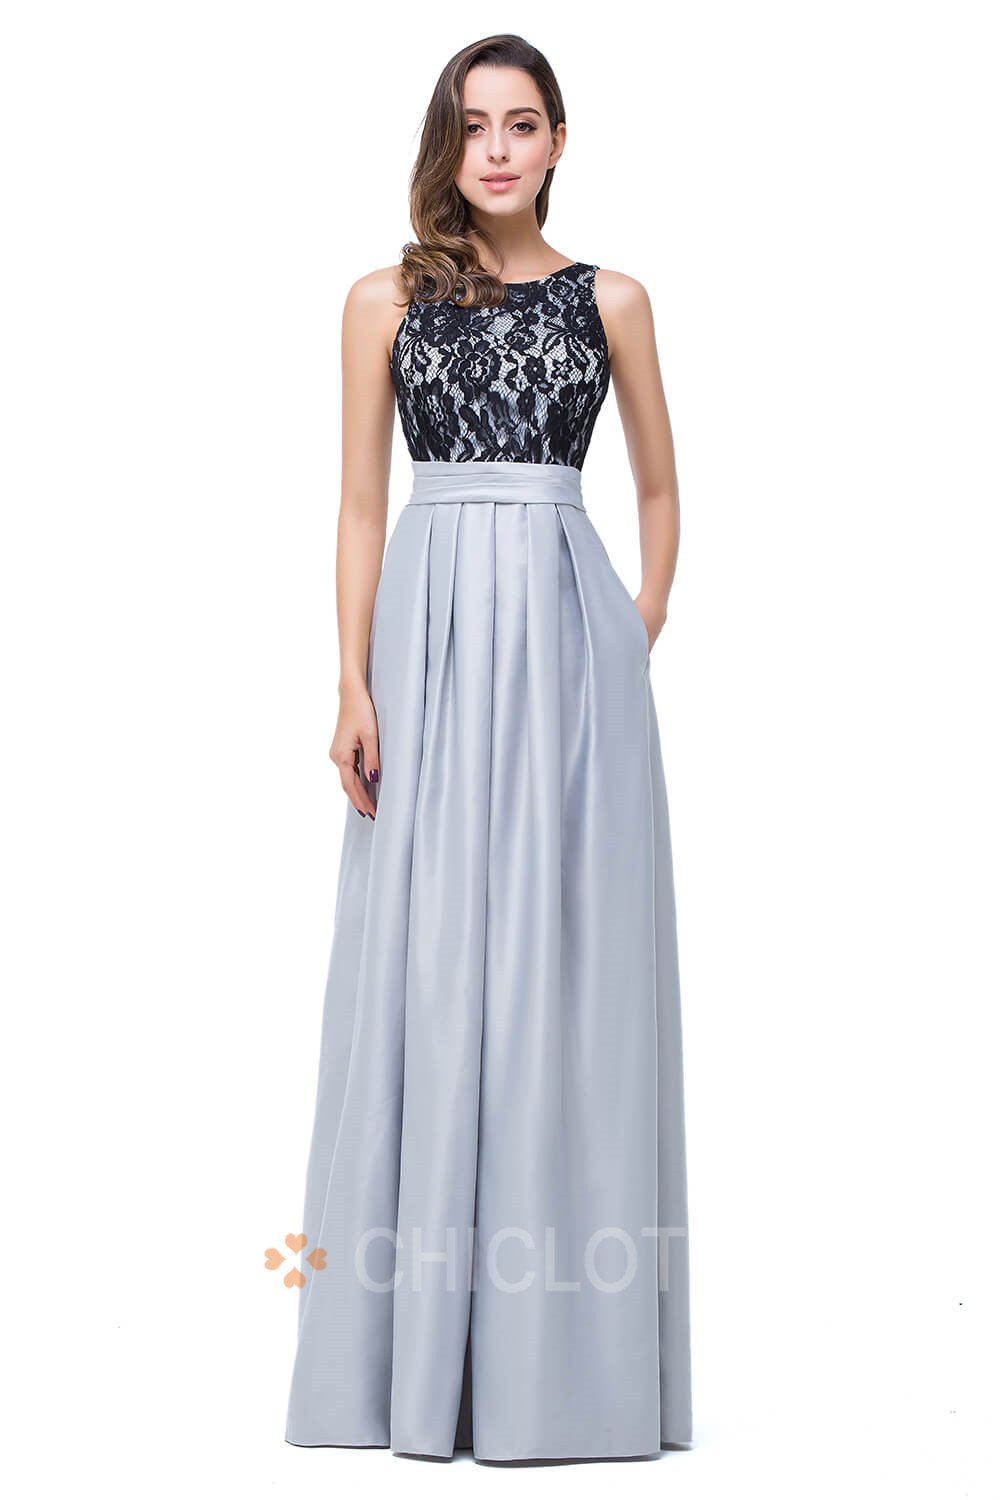 Chicloth Sleeveless Women Floral Print Overlay Slit Elegant Dresses-Cheap Casual Dresses